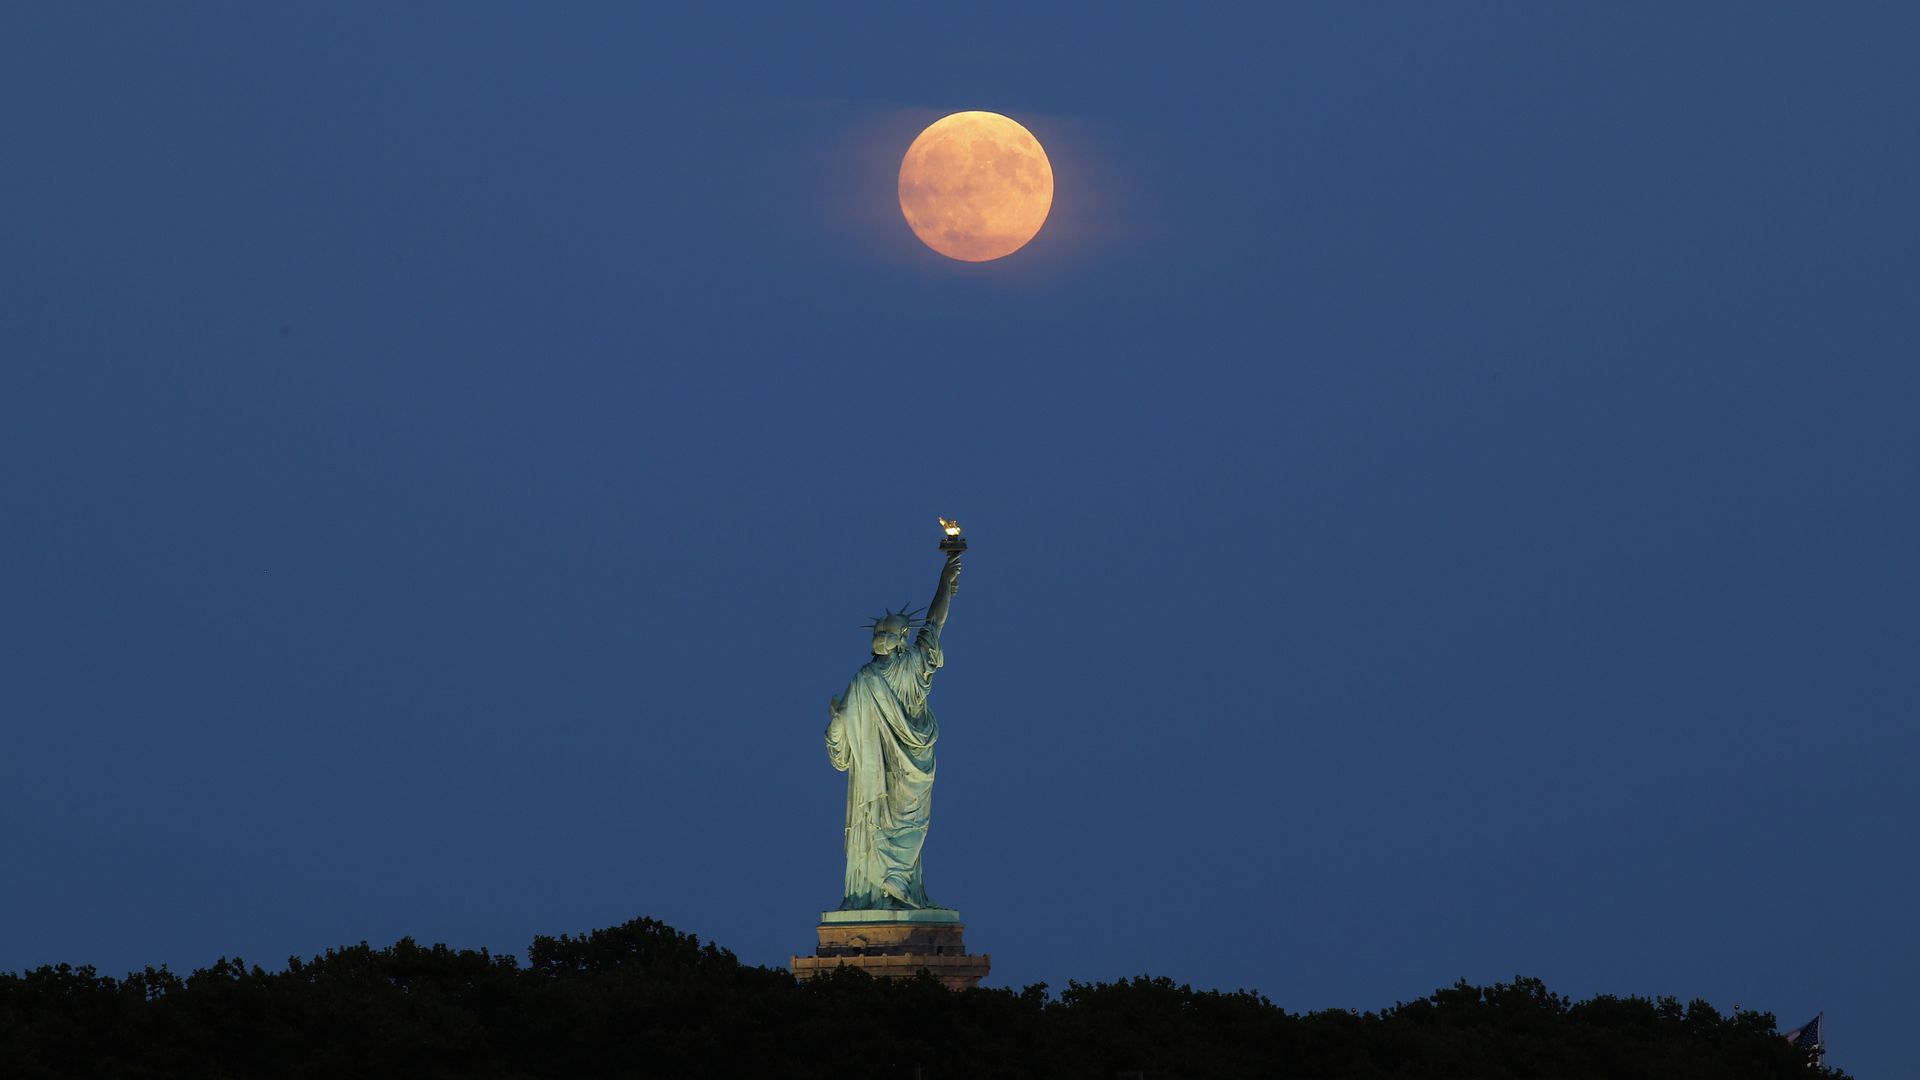 Statue of Liberty on dark background with orange moon